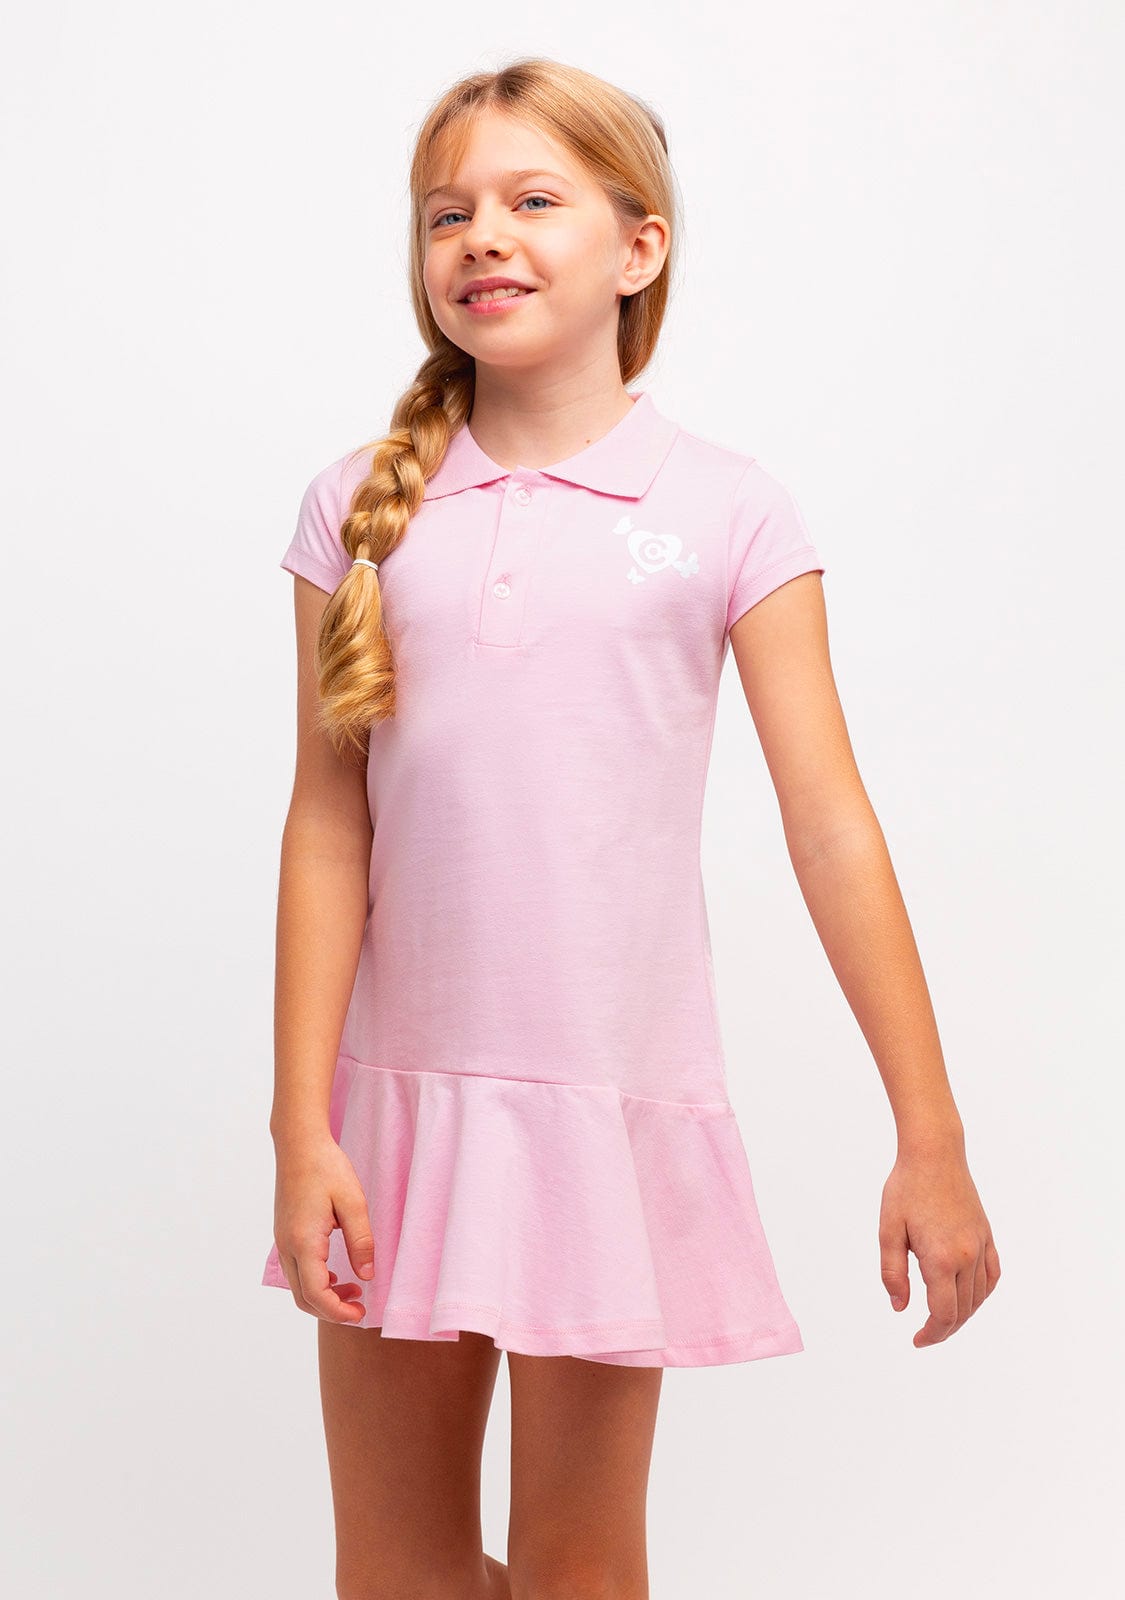 CONGUITOS TEXTIL Clothing Girl´s Pink Conguitos Polo Dress